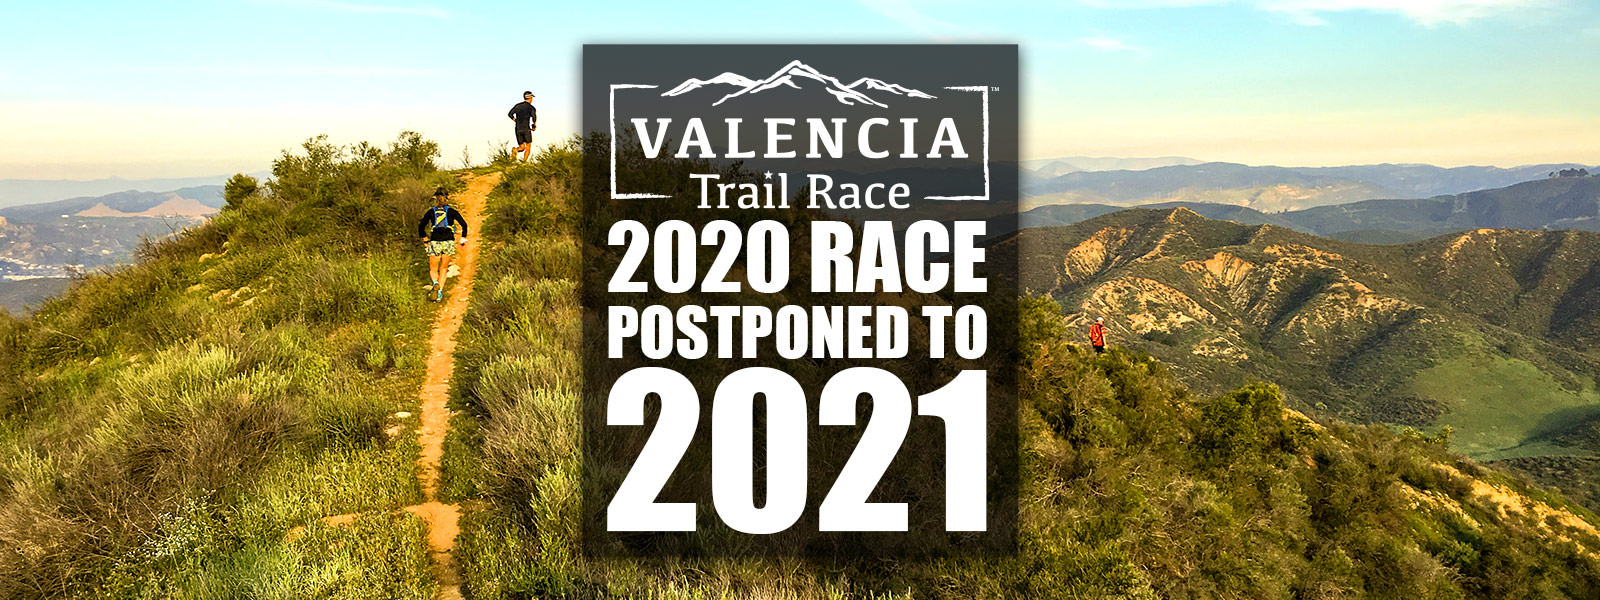 2020 RACE POSTPONED TO 2021